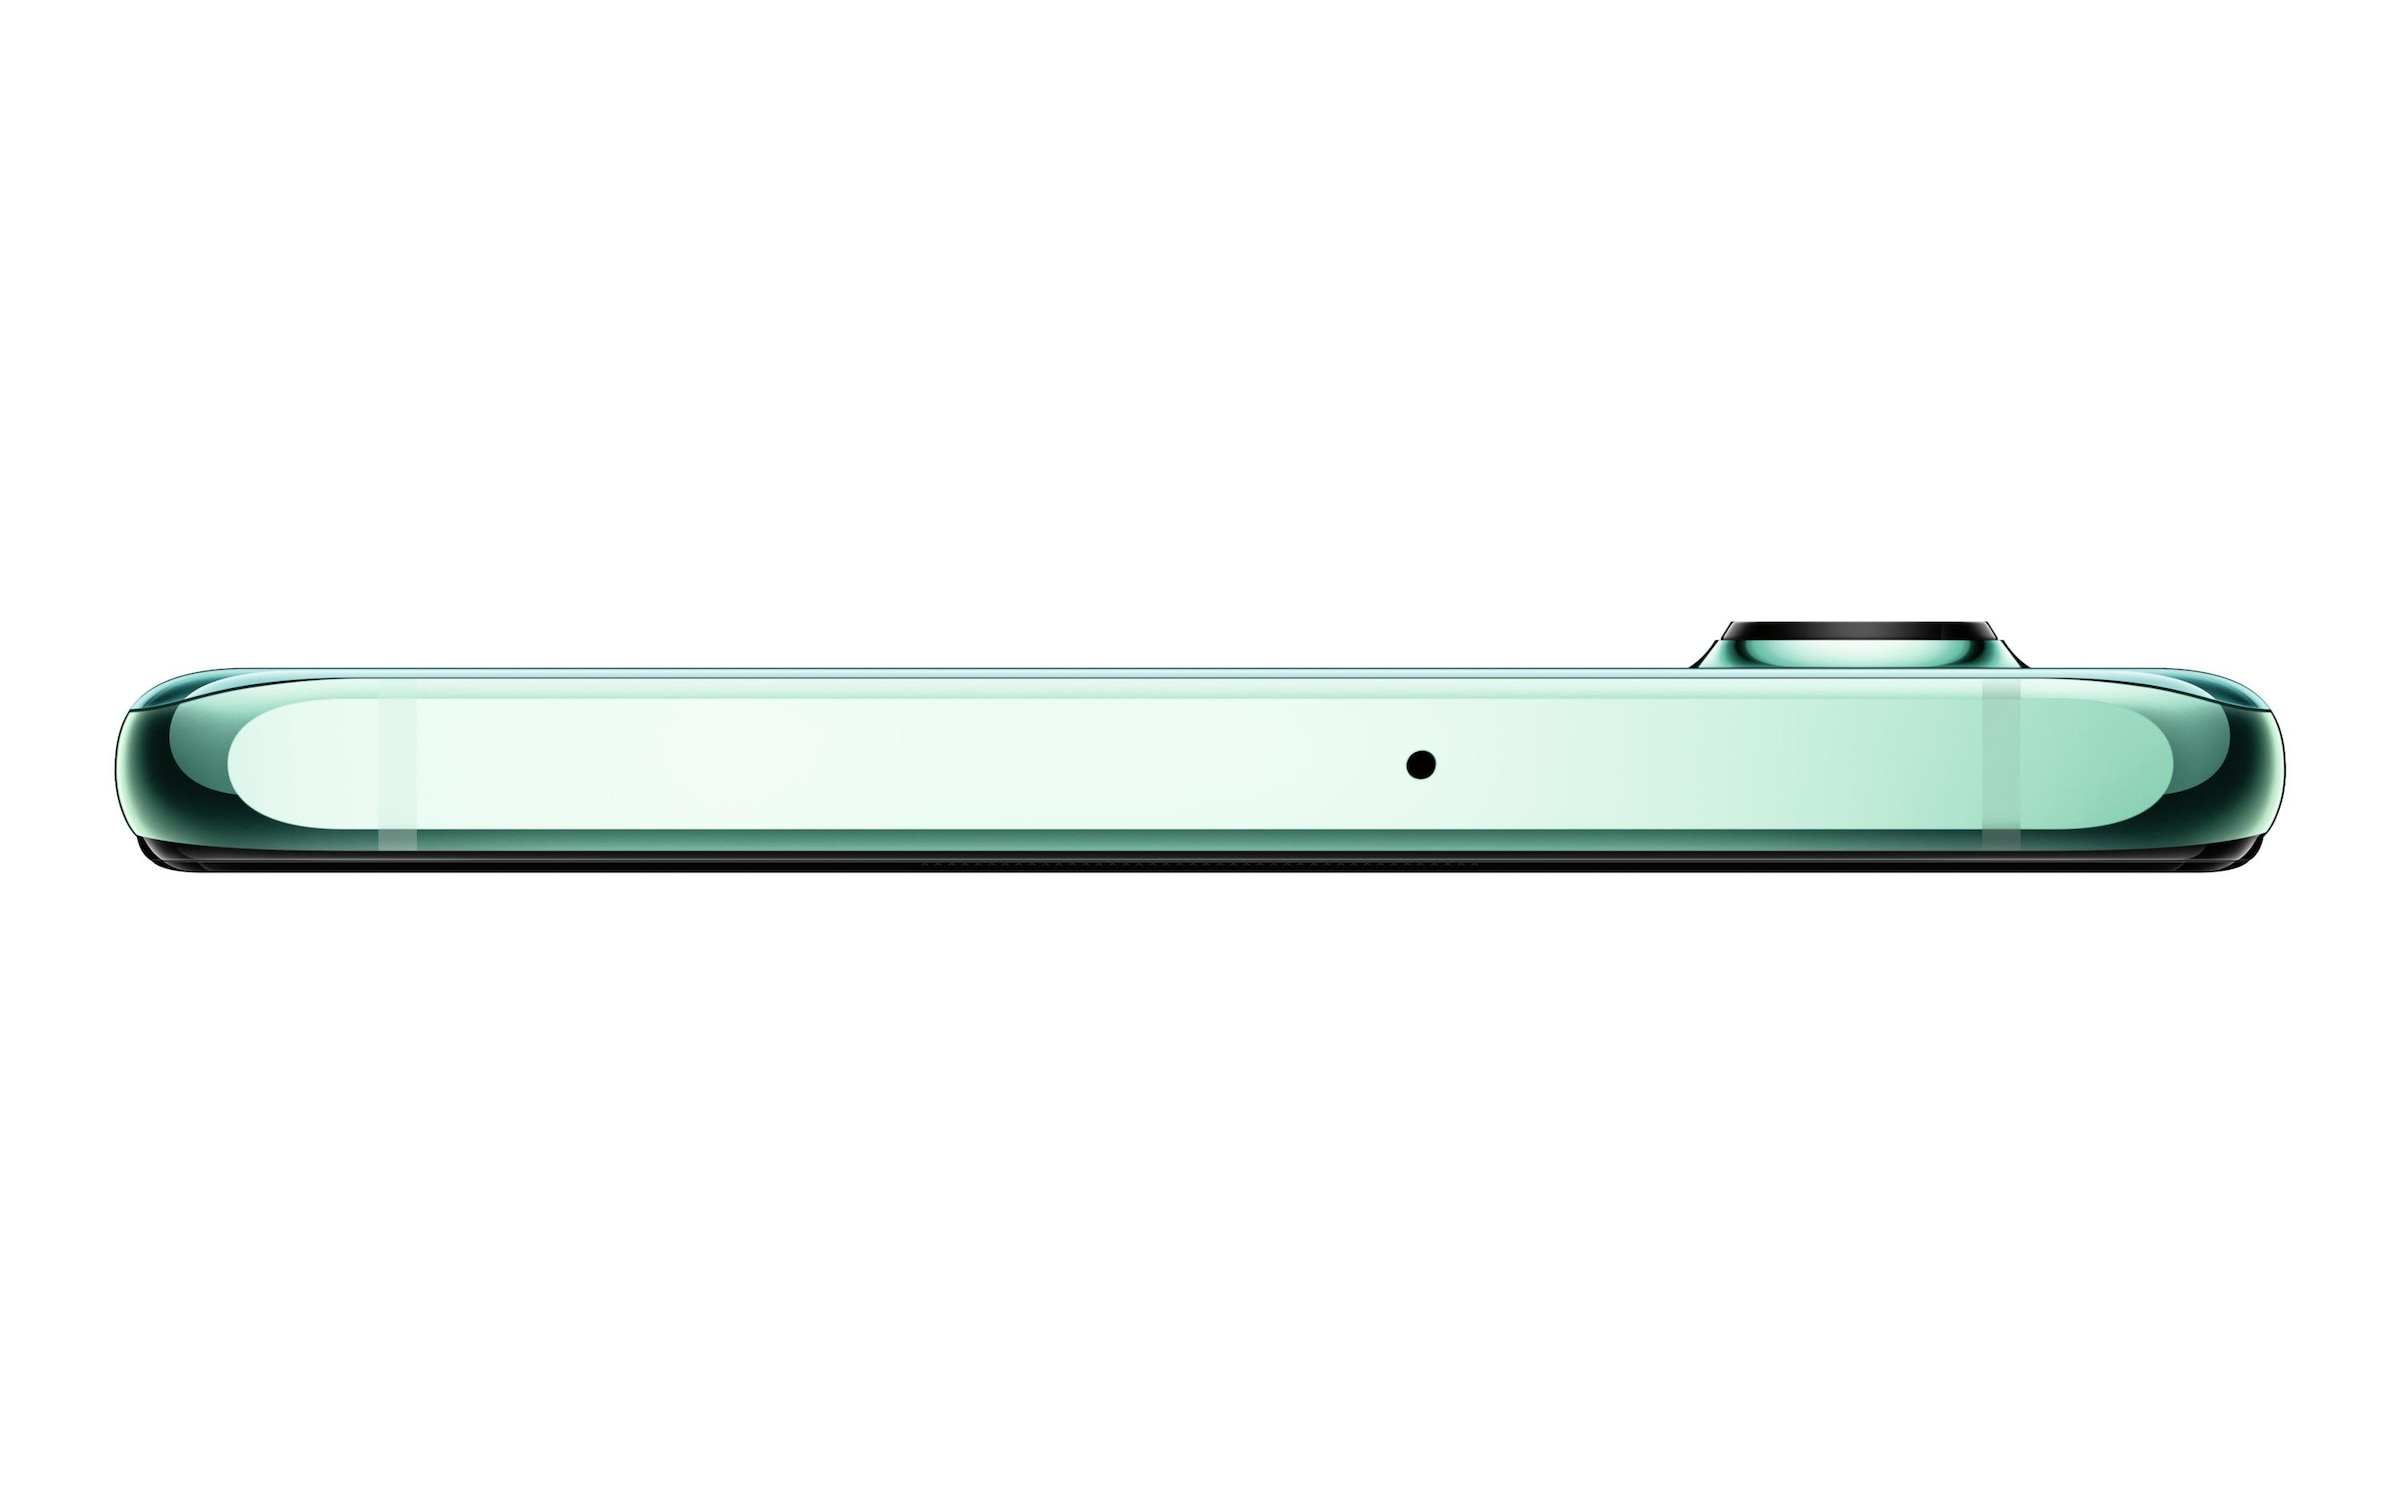 Huawei Smartphone »P30 Aurora Blue«, Aurora Blue/Blau, 15,49 cm/6,1 Zoll, 128 GB Speicherplatz, 40 MP Kamera